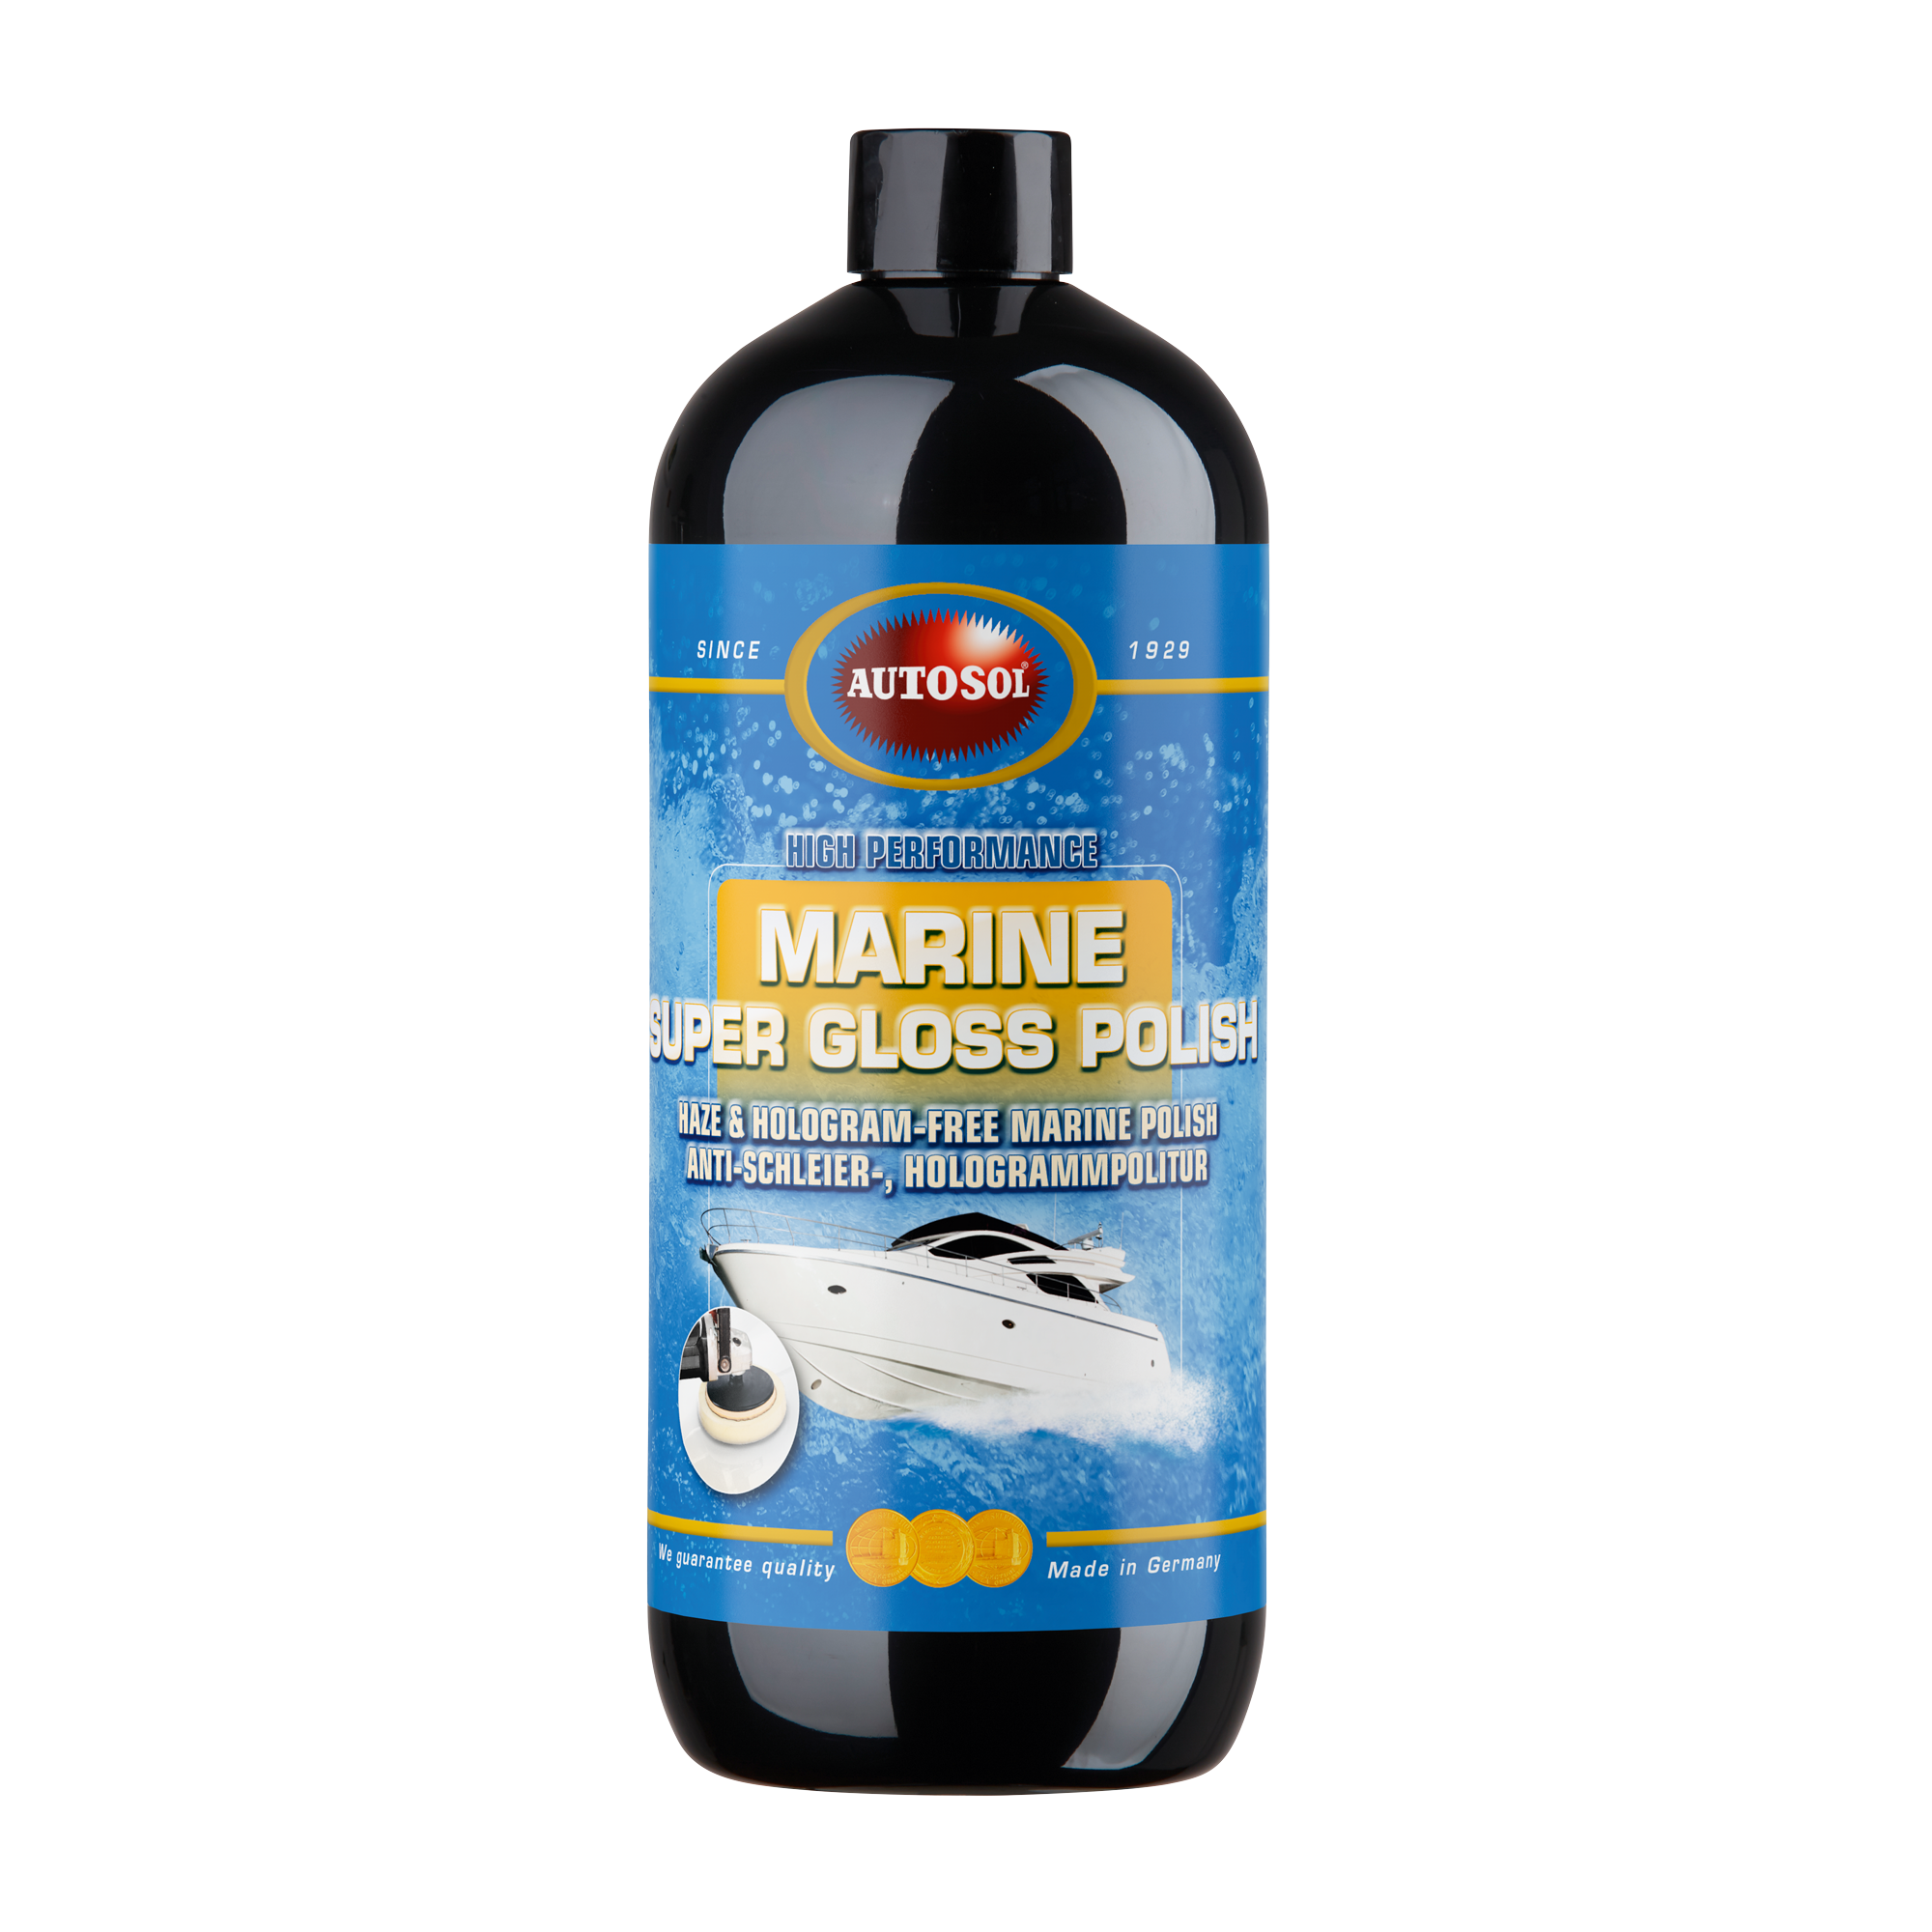 Autosol Marine Super Gloss Polish, 1 Liter